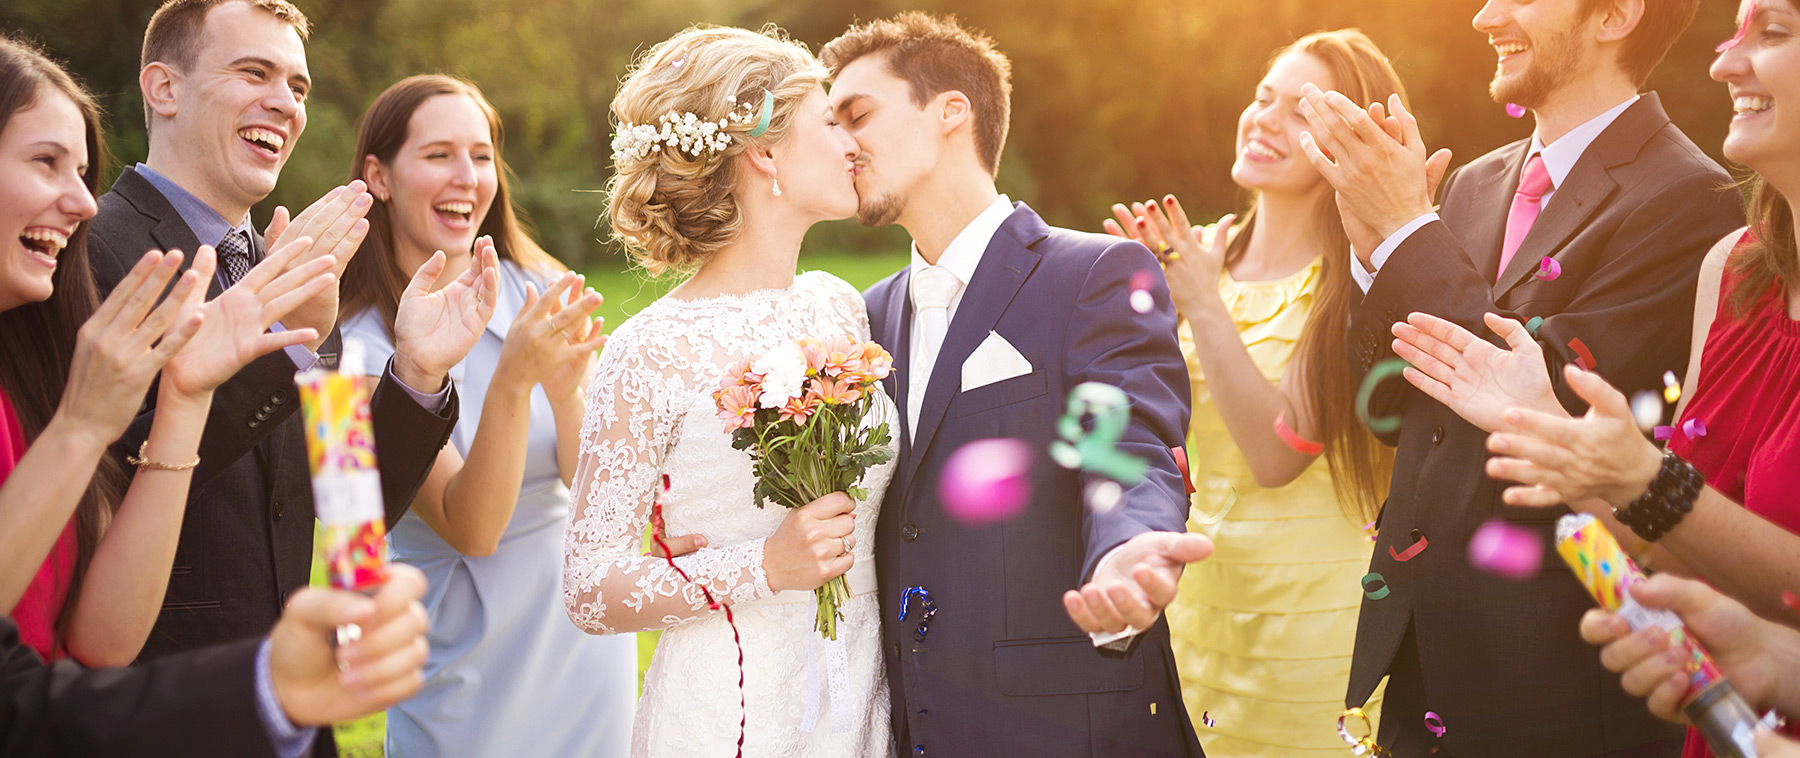 Dream Wedding Officiants - Plan your Dream Wedding